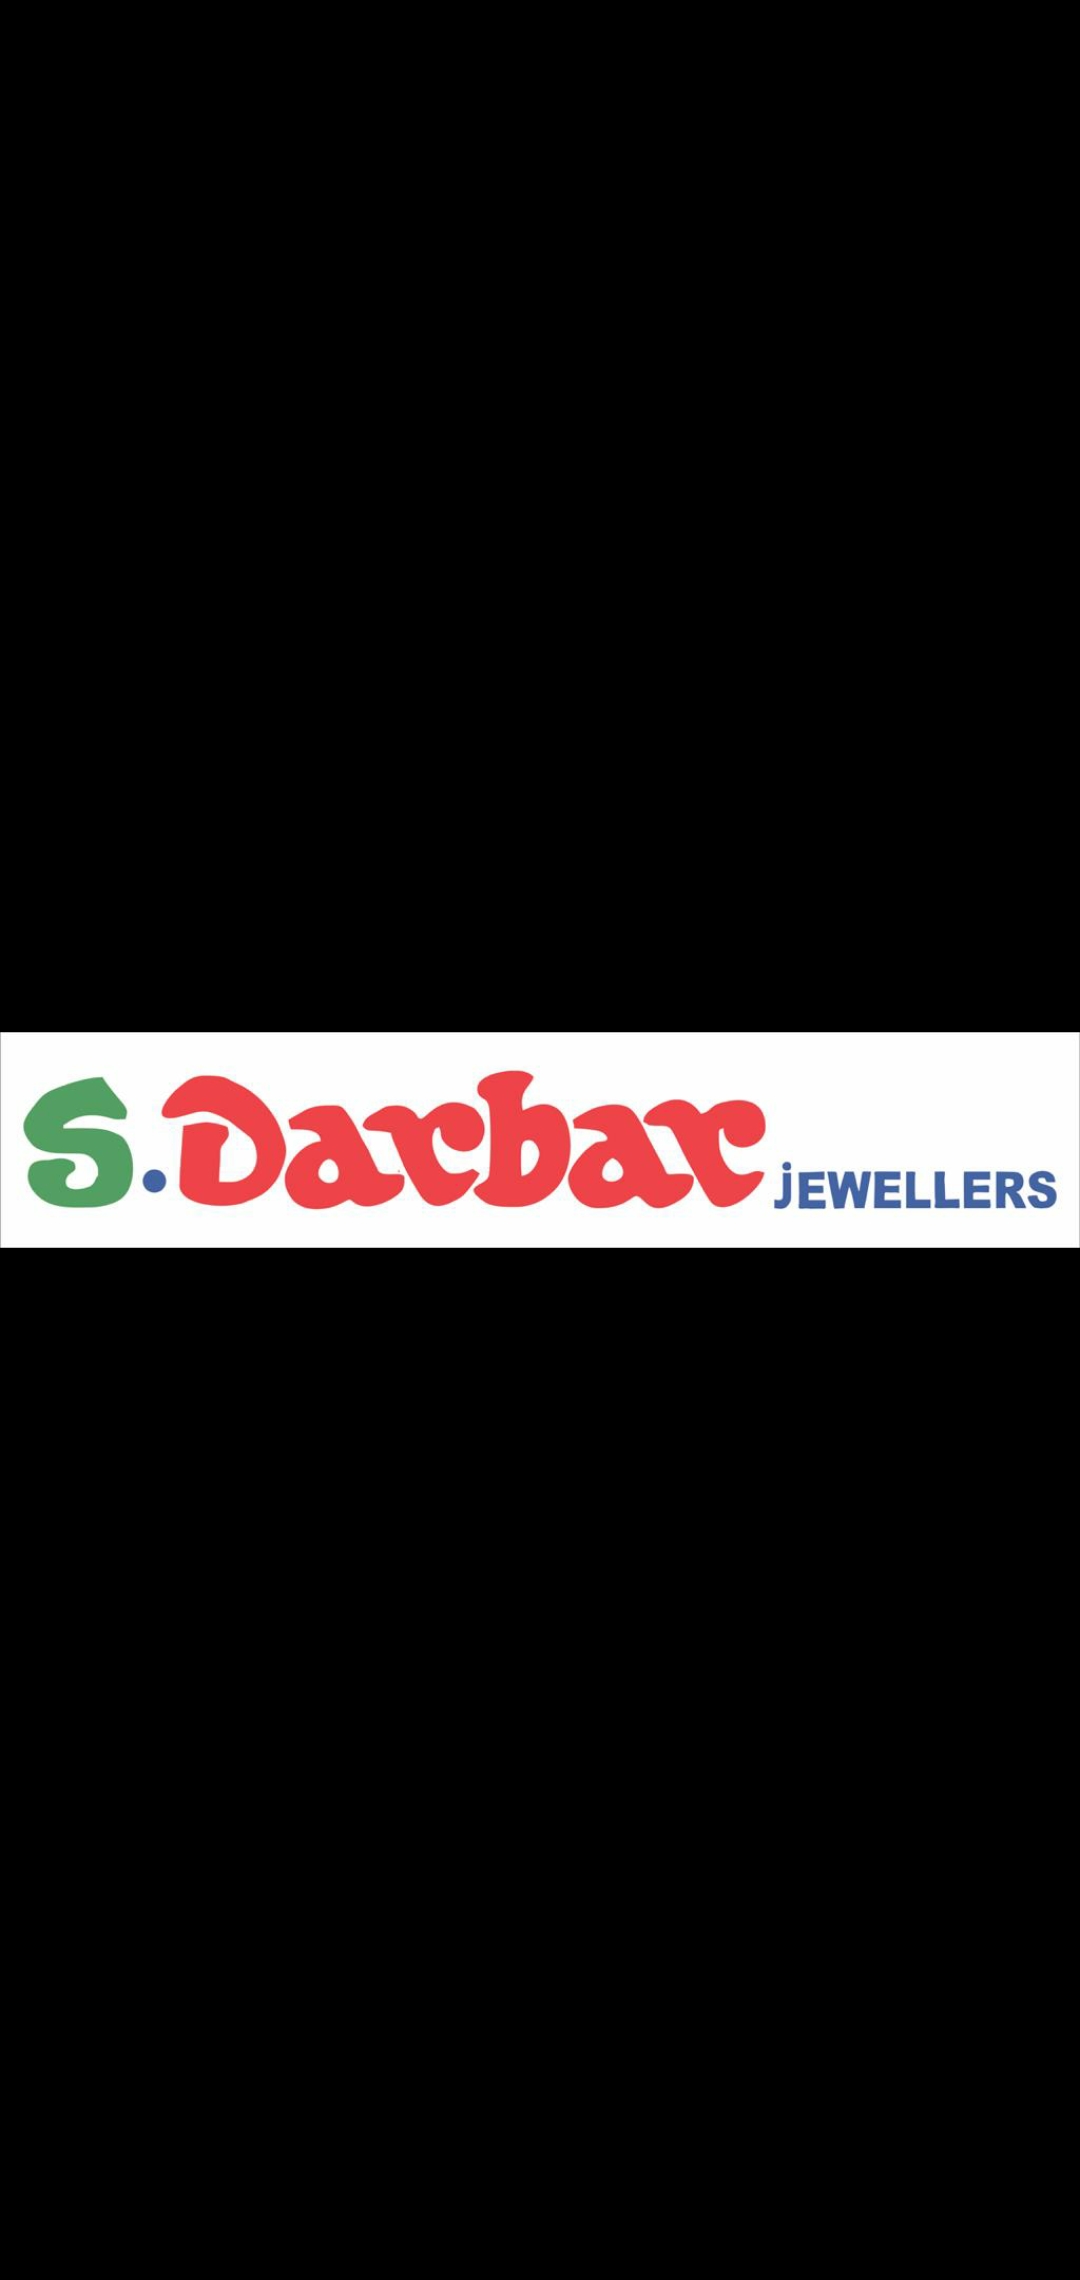 S Darbar Jewellers